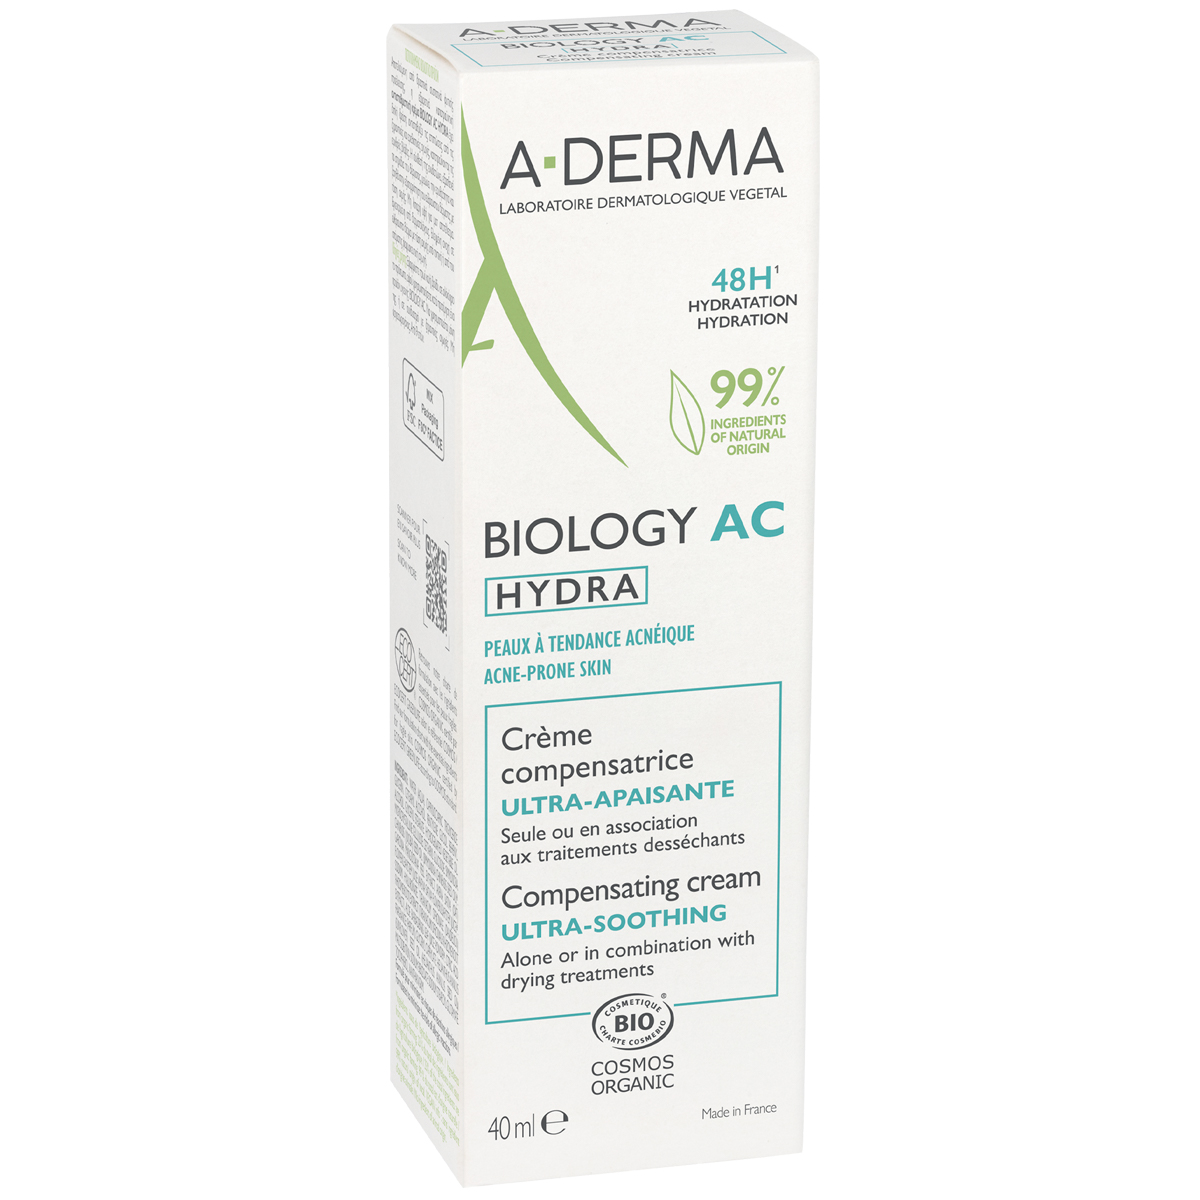 Biology AC Hydra крем восстанавливающий баланс ослабленной кожи 40мл А-Дерма Биолоджи